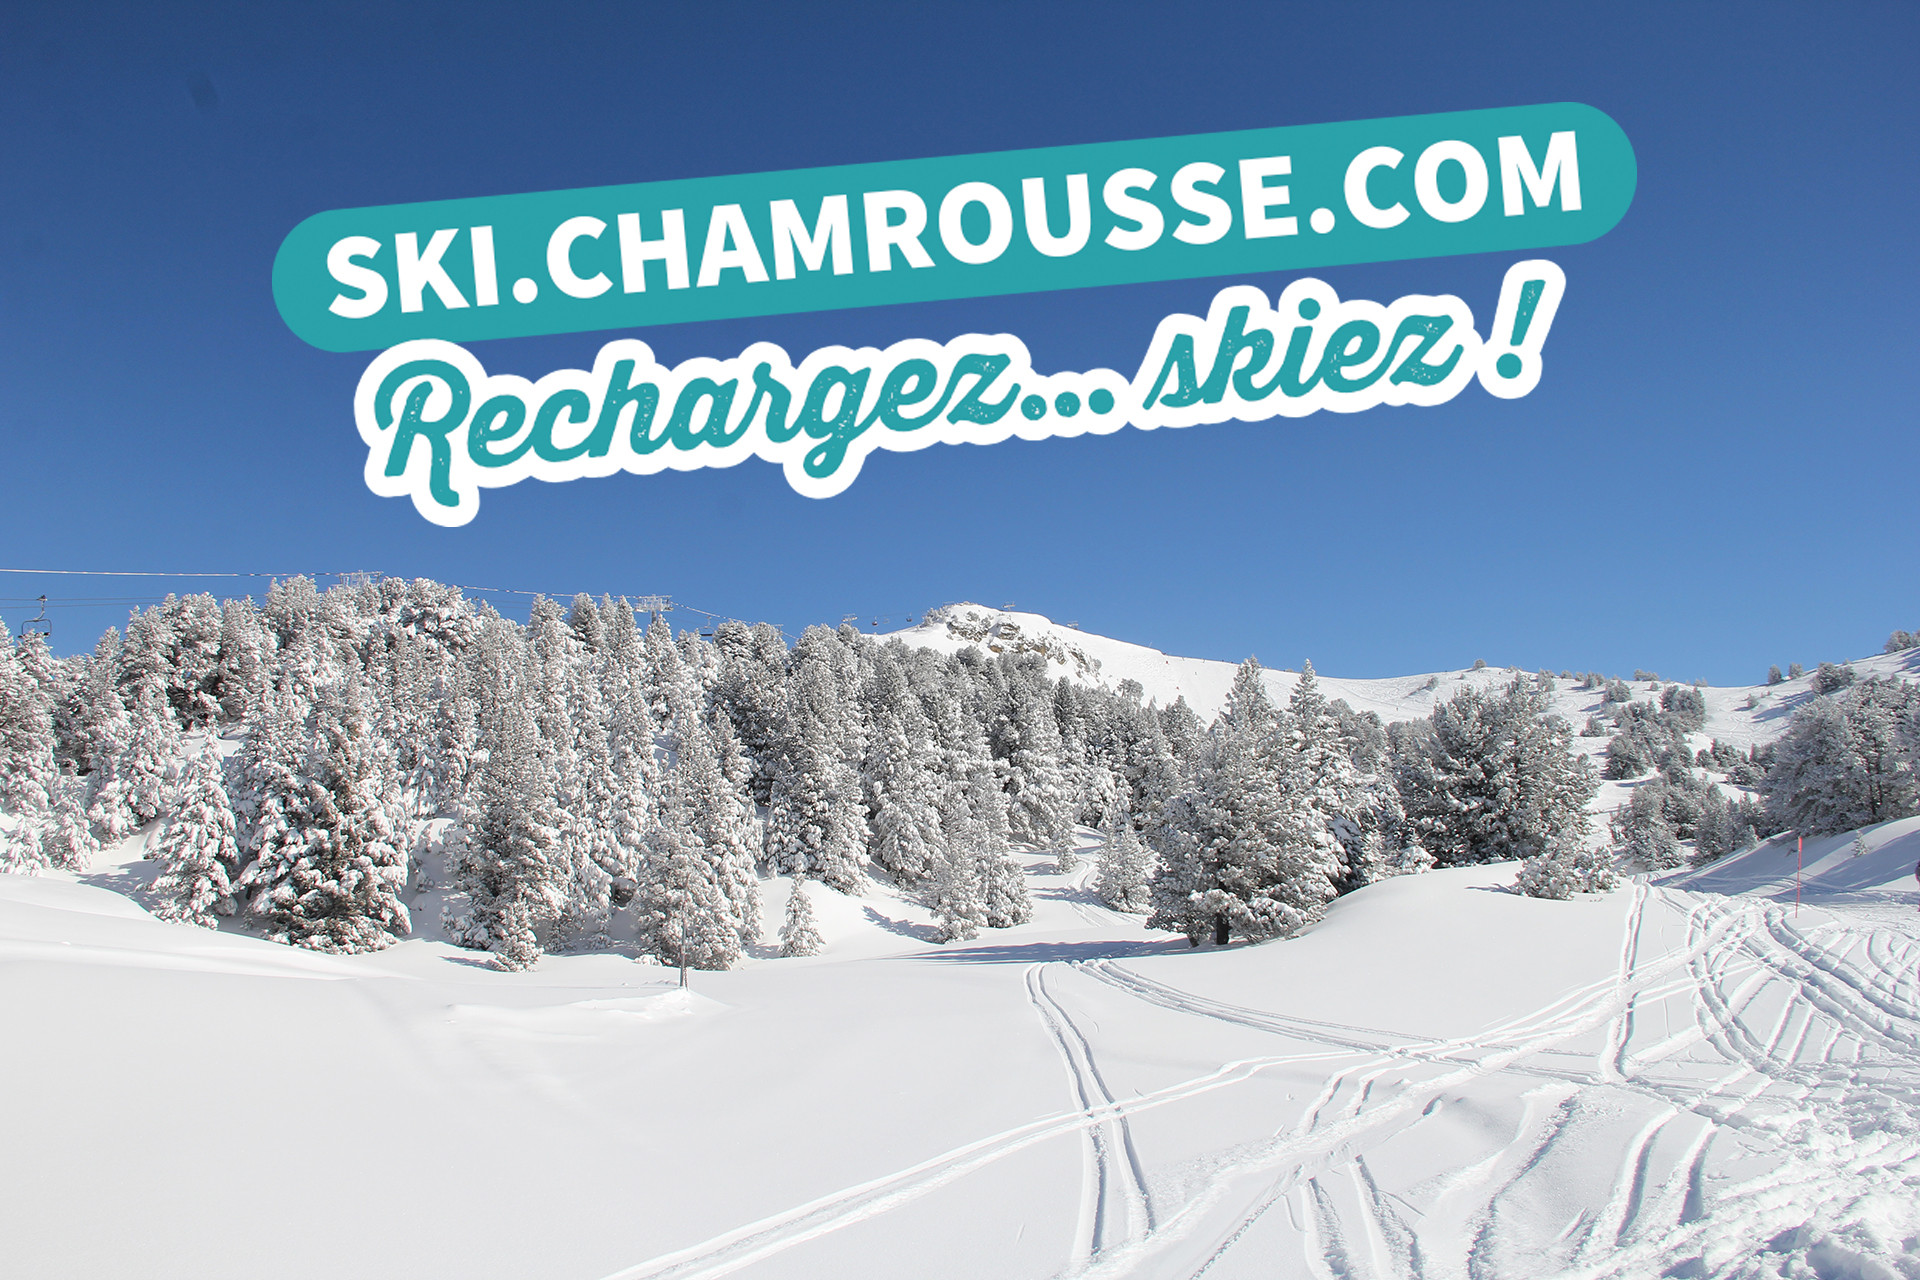 Chamrousse web skipass promotion 8% discount mountain ski resort grenoble lyon isere french alps france